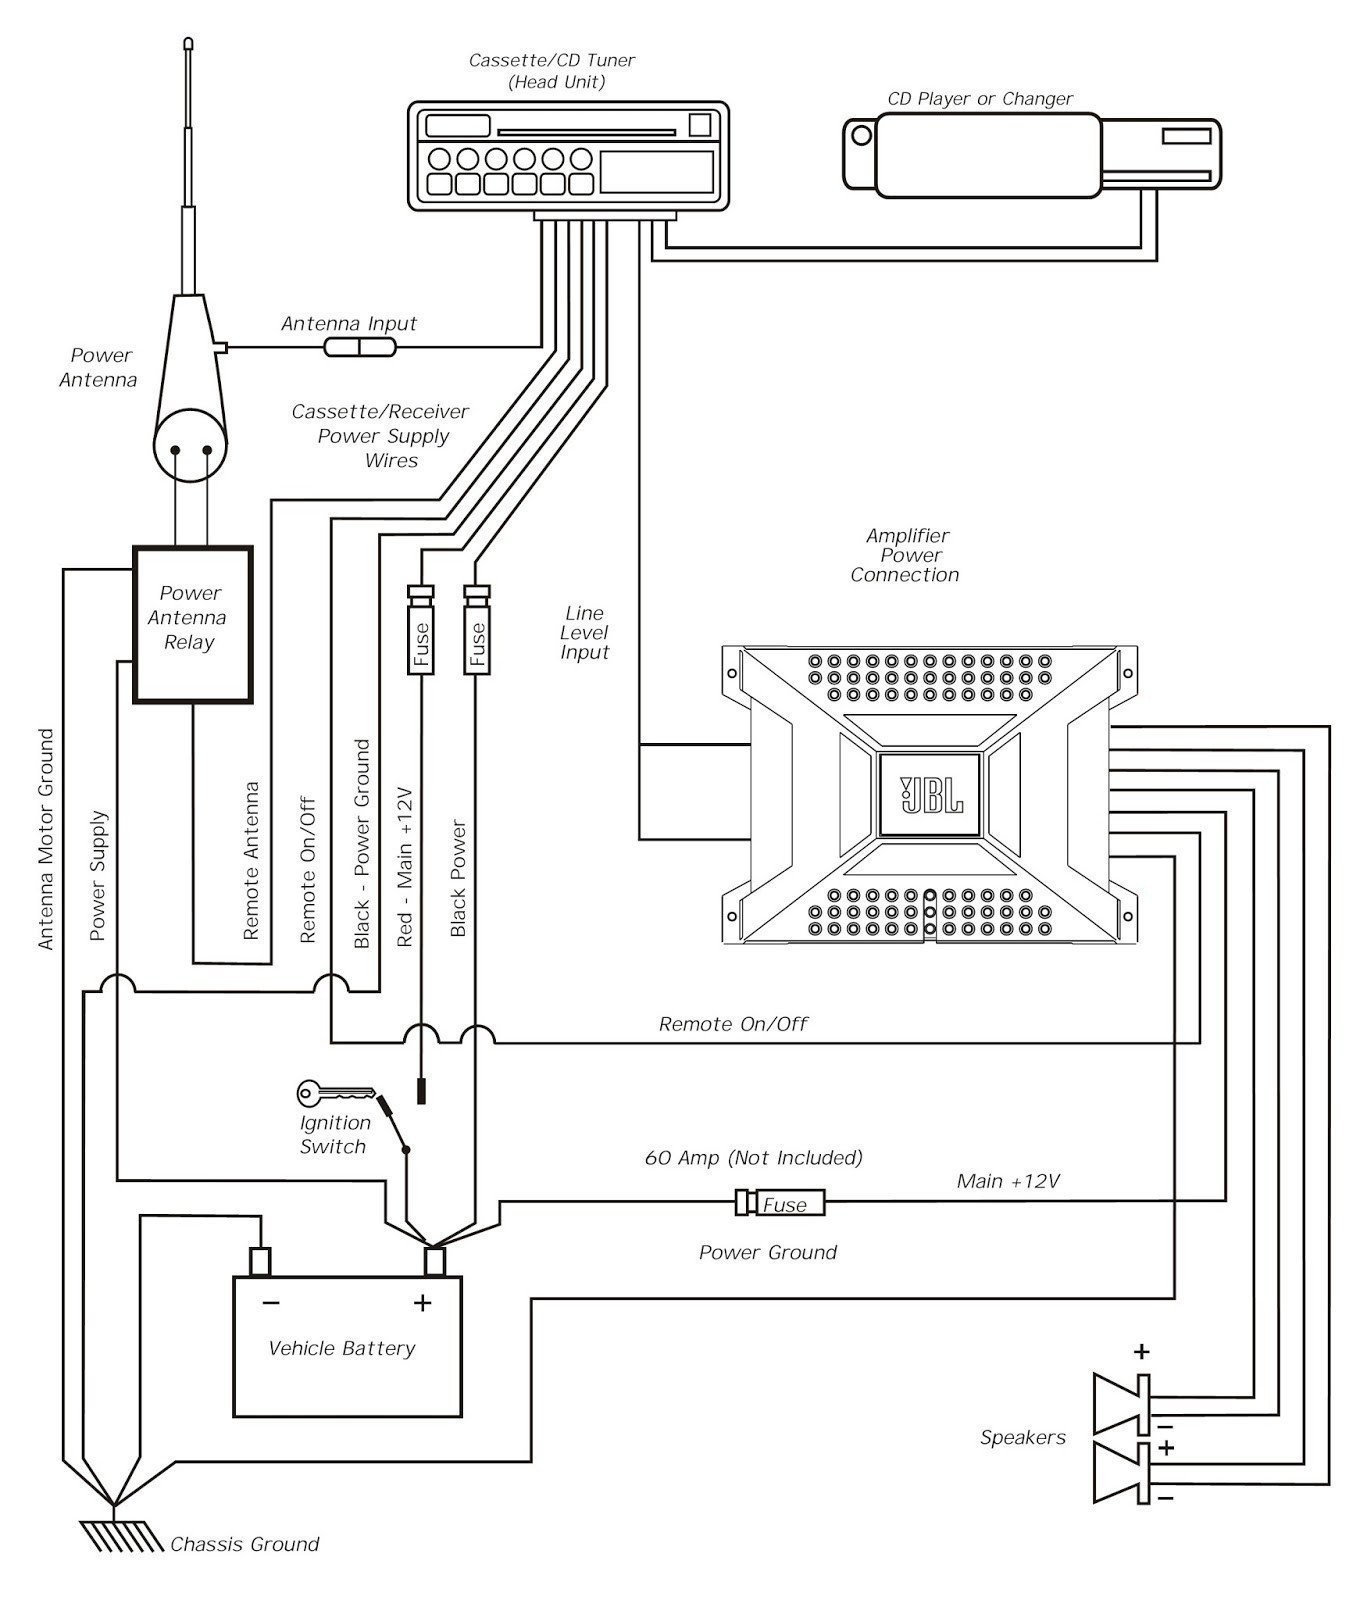 Predator Engine Wiring Diagram 2819 Audiovox Pinout Wire Harness Vm9311ts Of Predator Engine Wiring Diagram